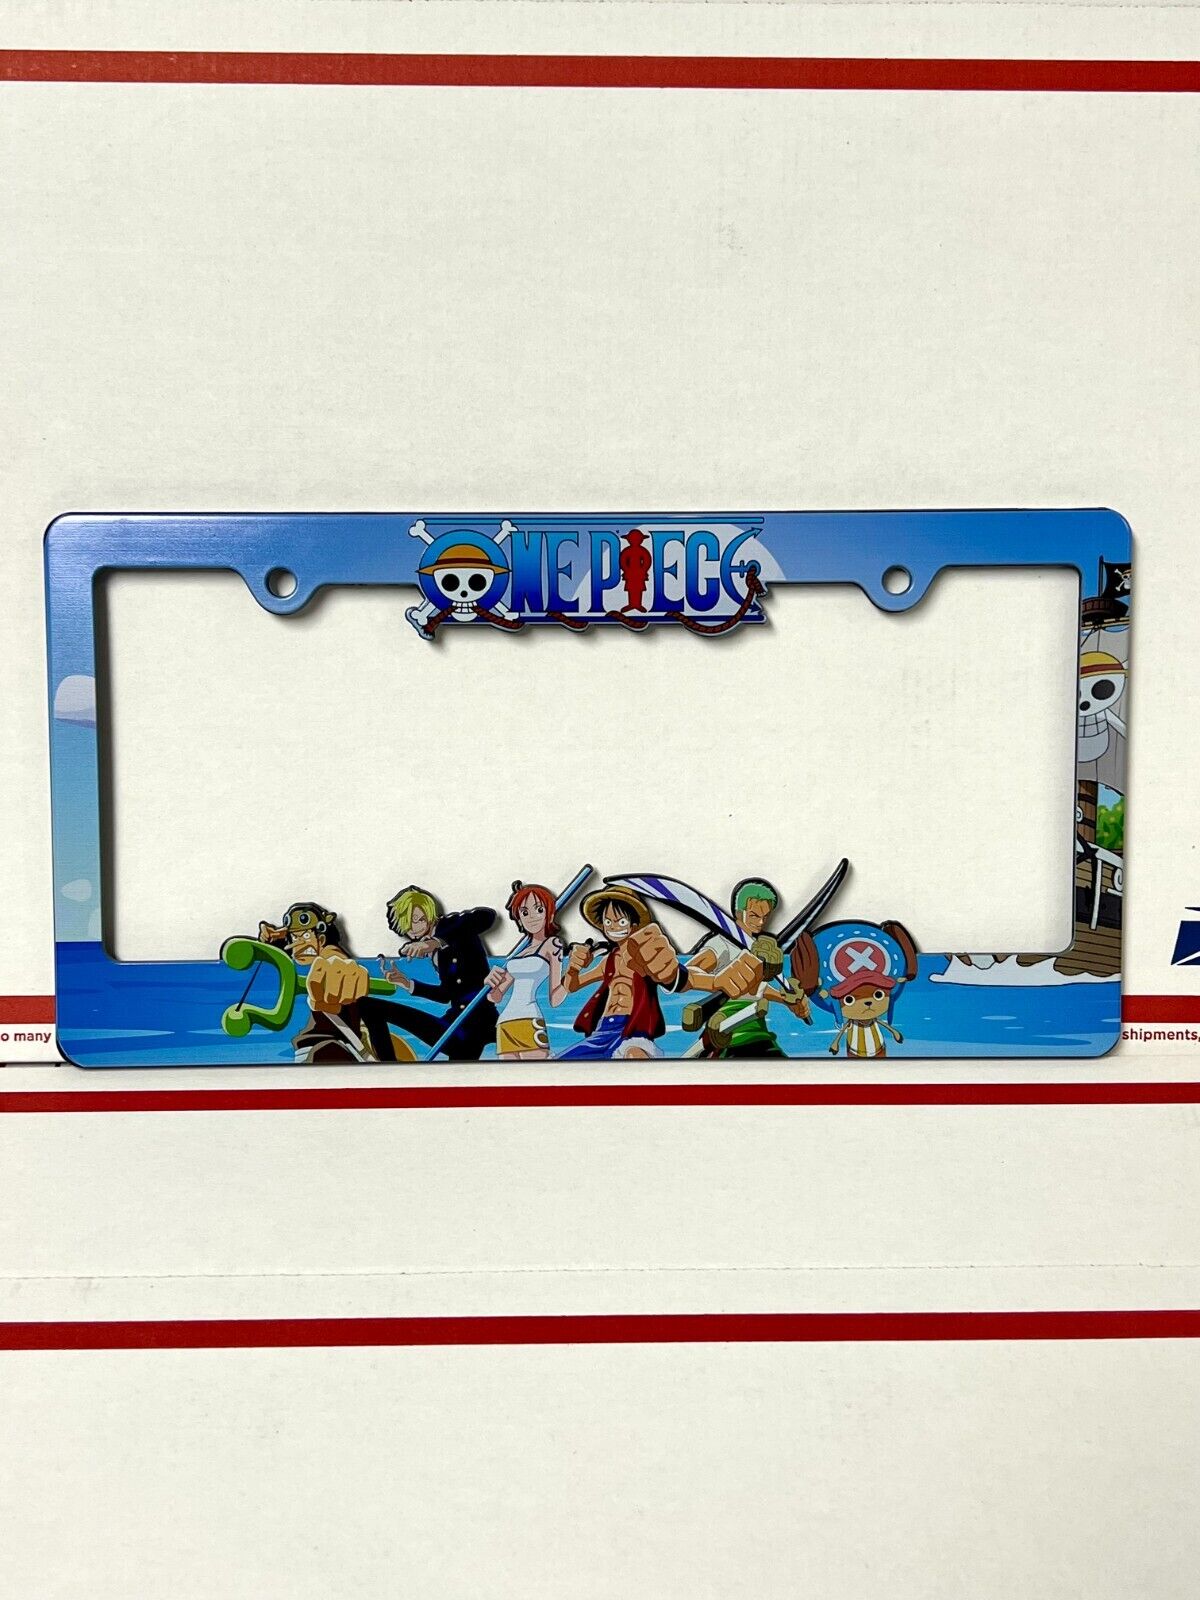 One Piece License Plate Frame with Luffy, Zoro, Nami, Chopper, Sanji, and Usopp